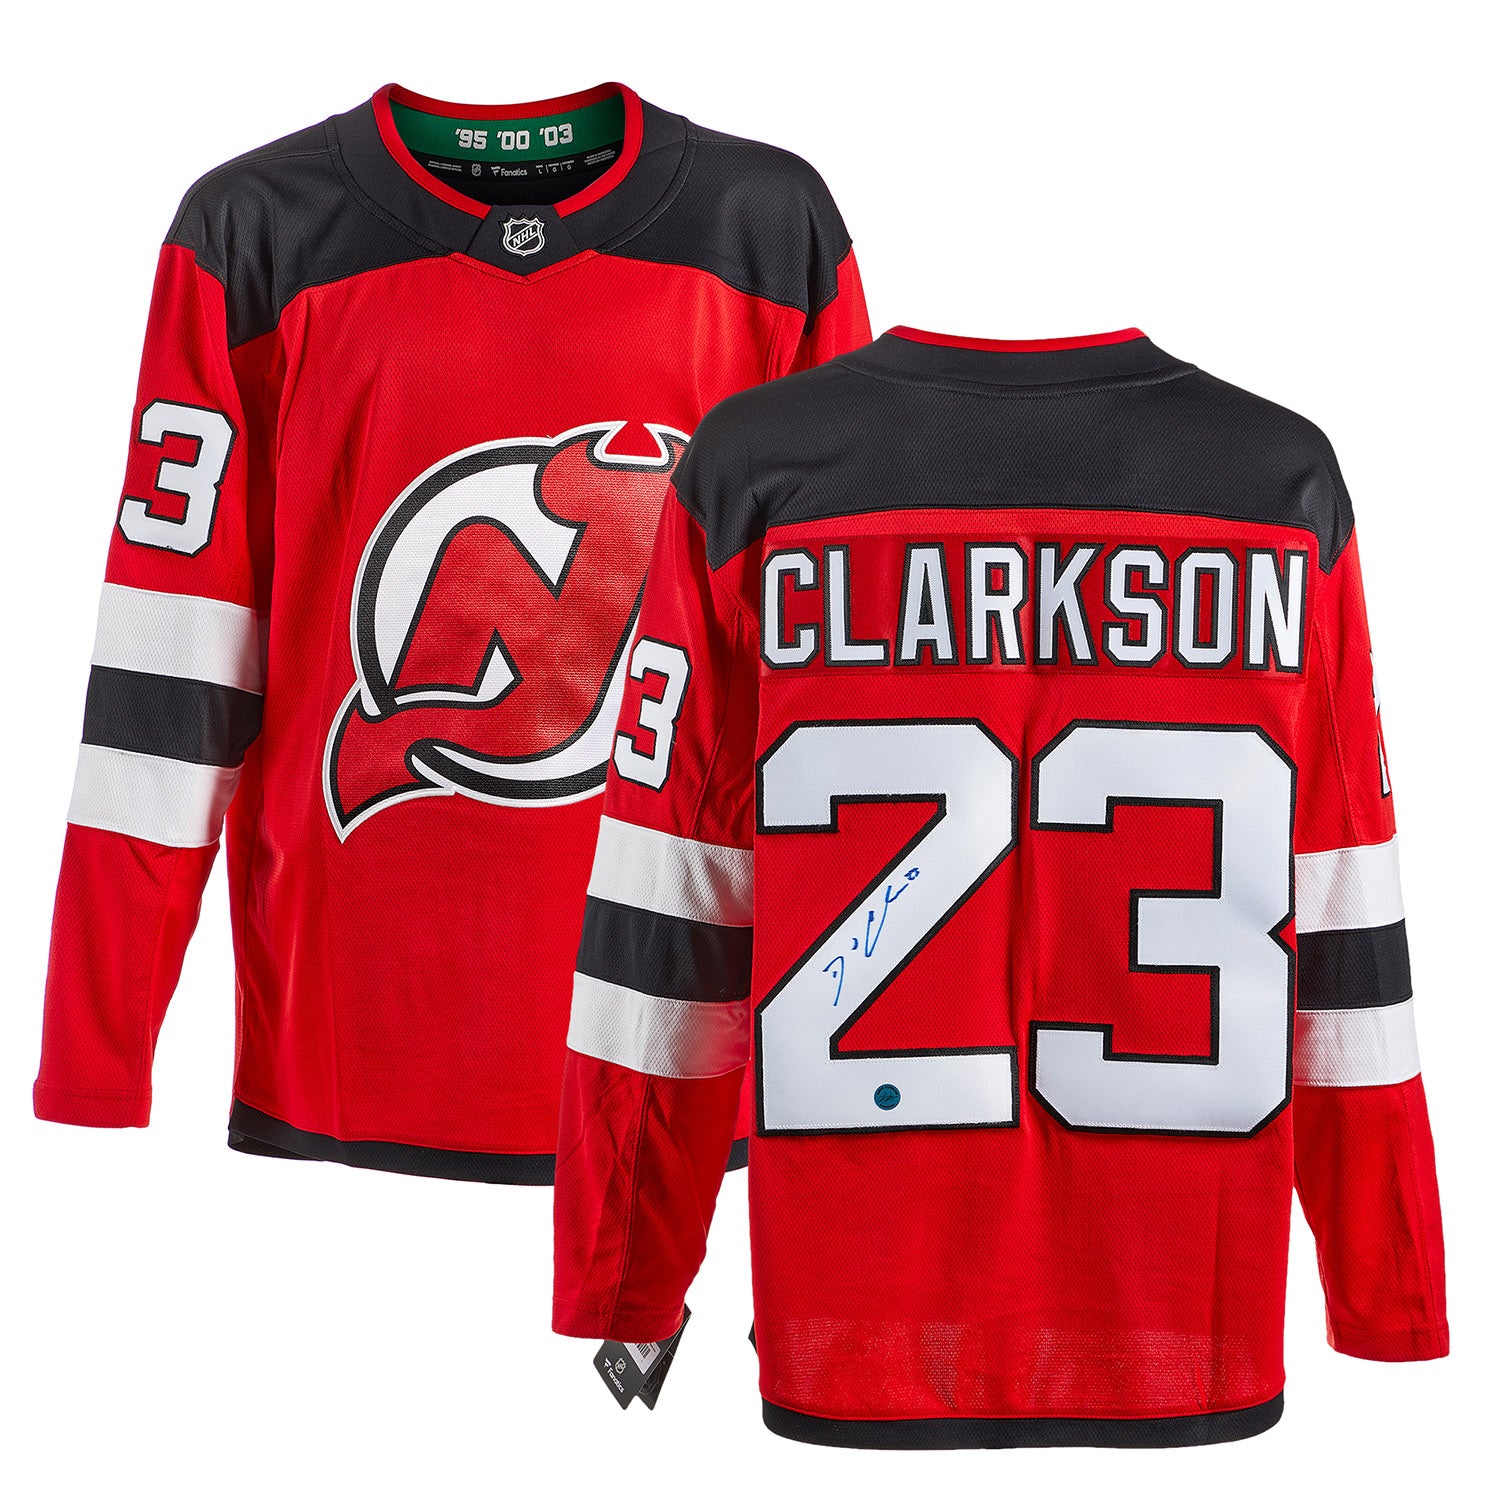 David Clarkson New Jersey Devils Autographed Fanatics Jersey